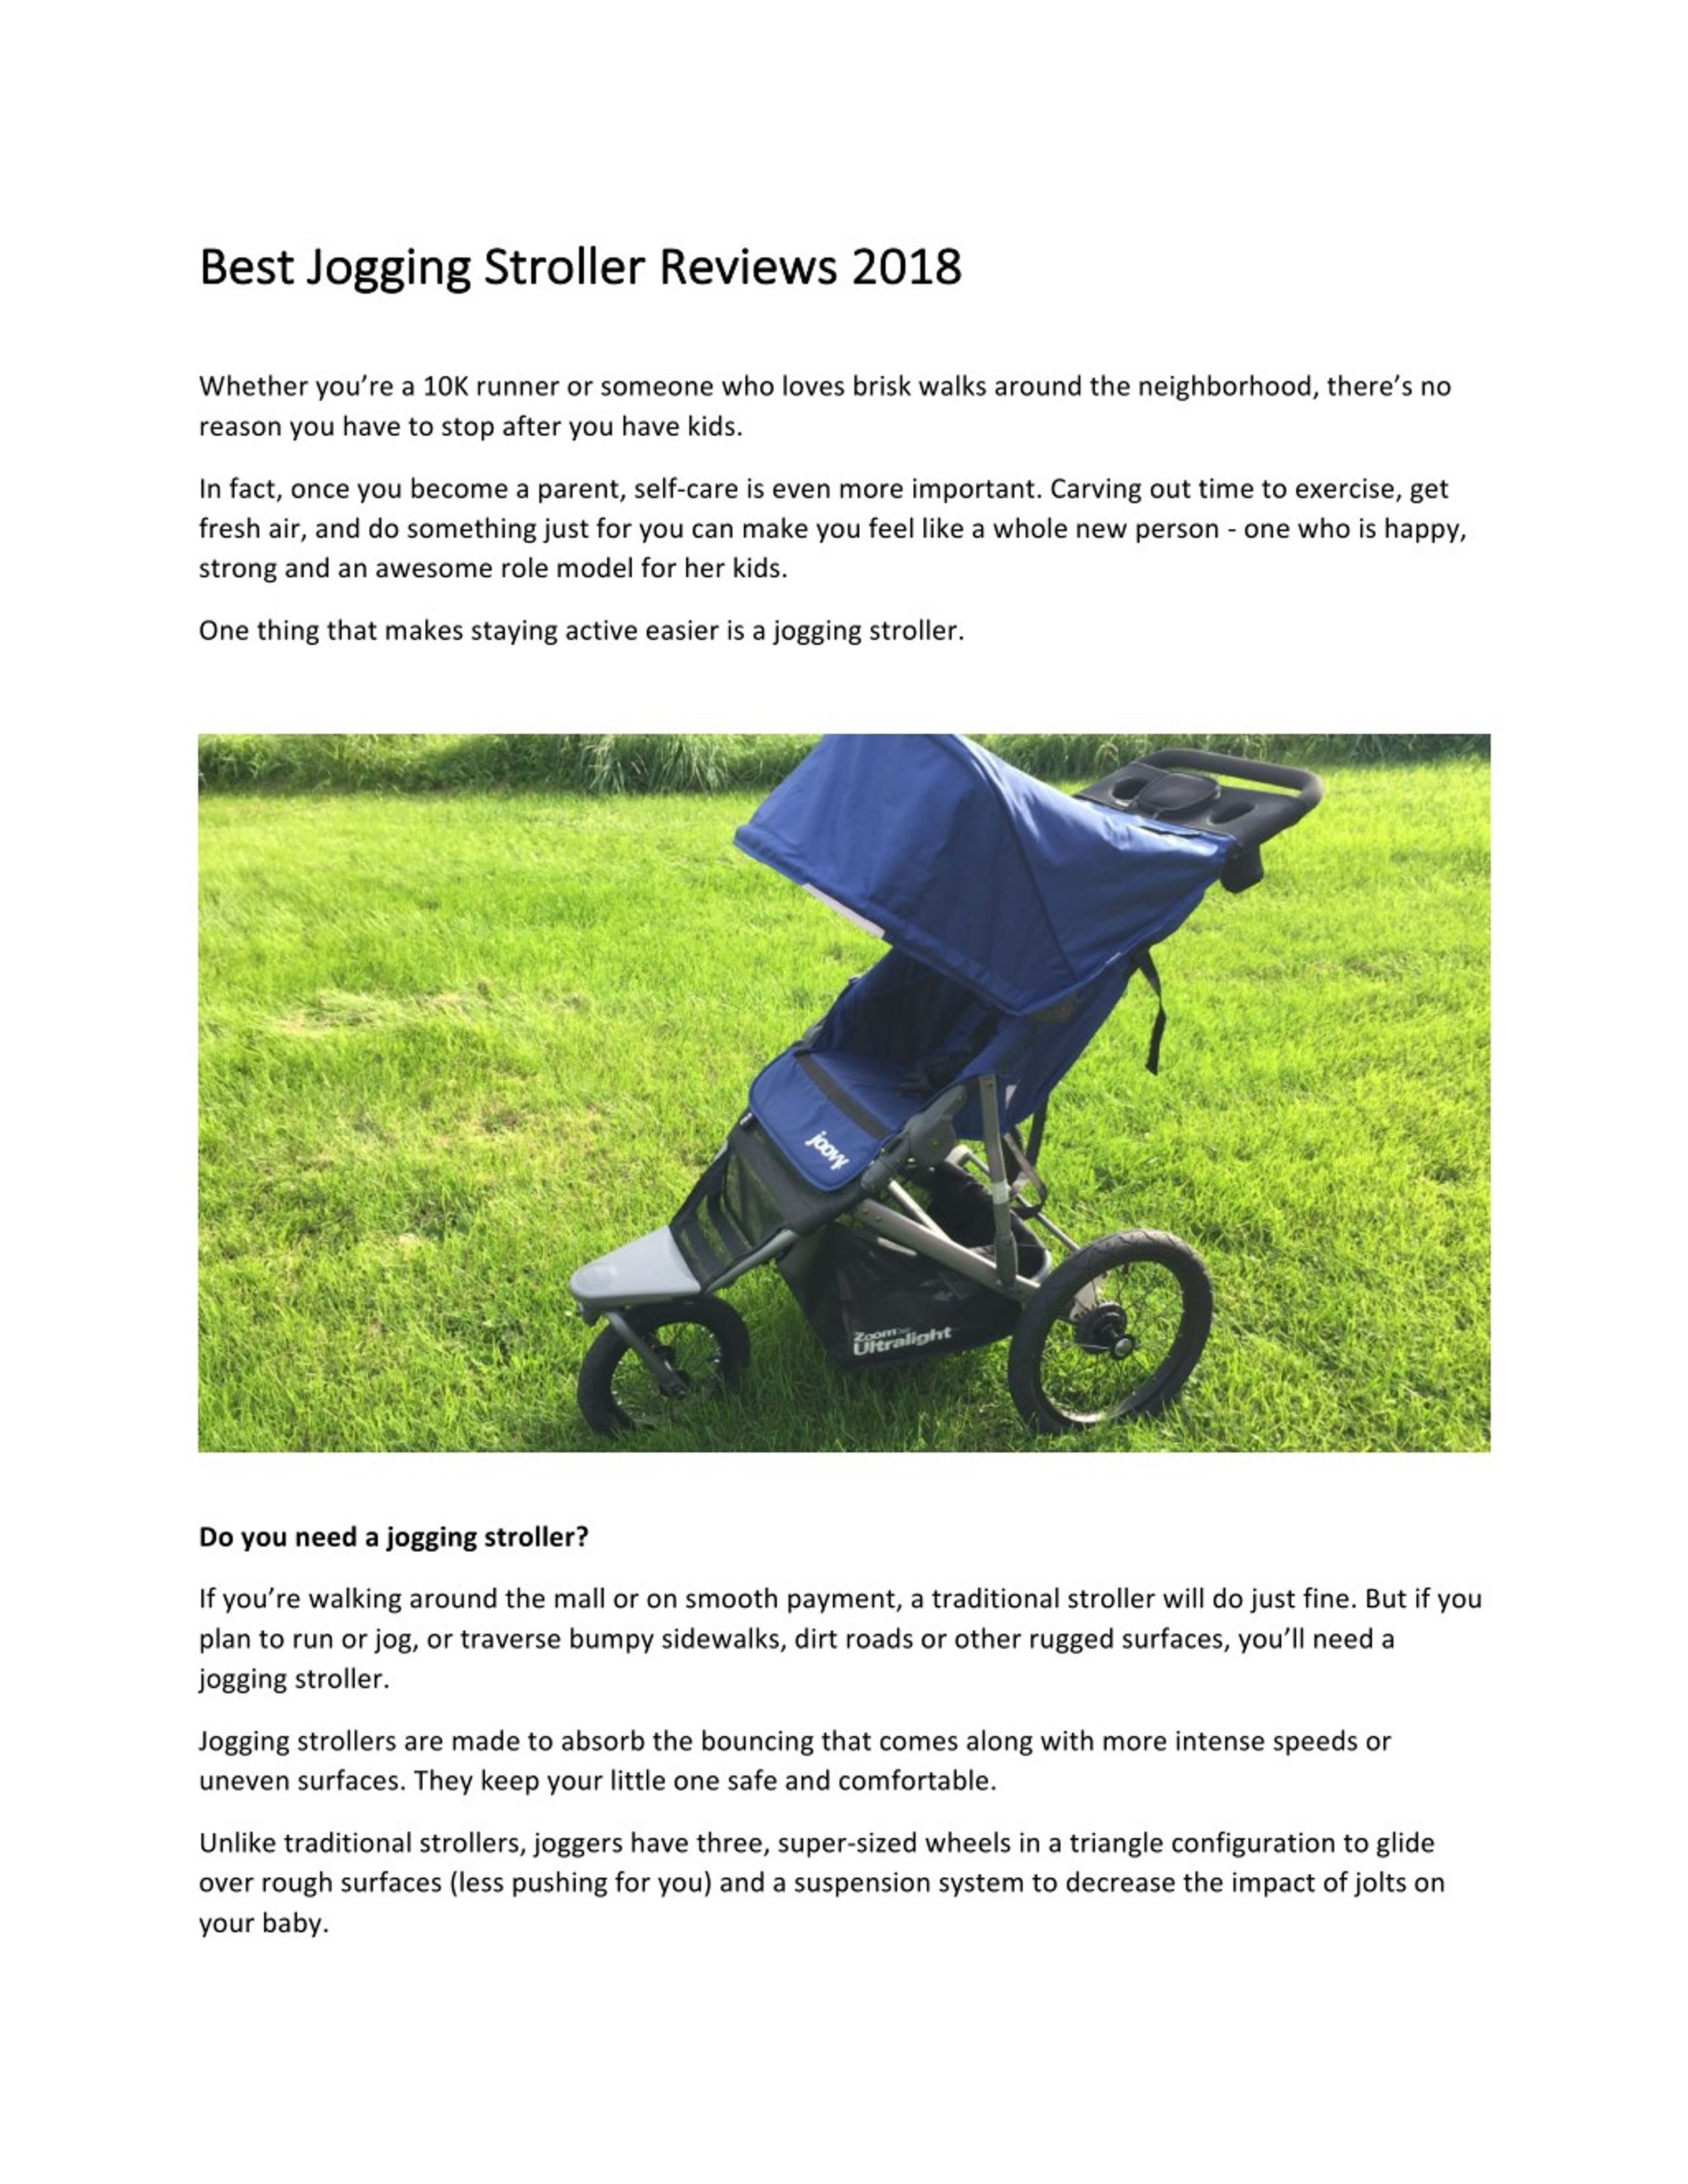 baby stroller reviews 2018